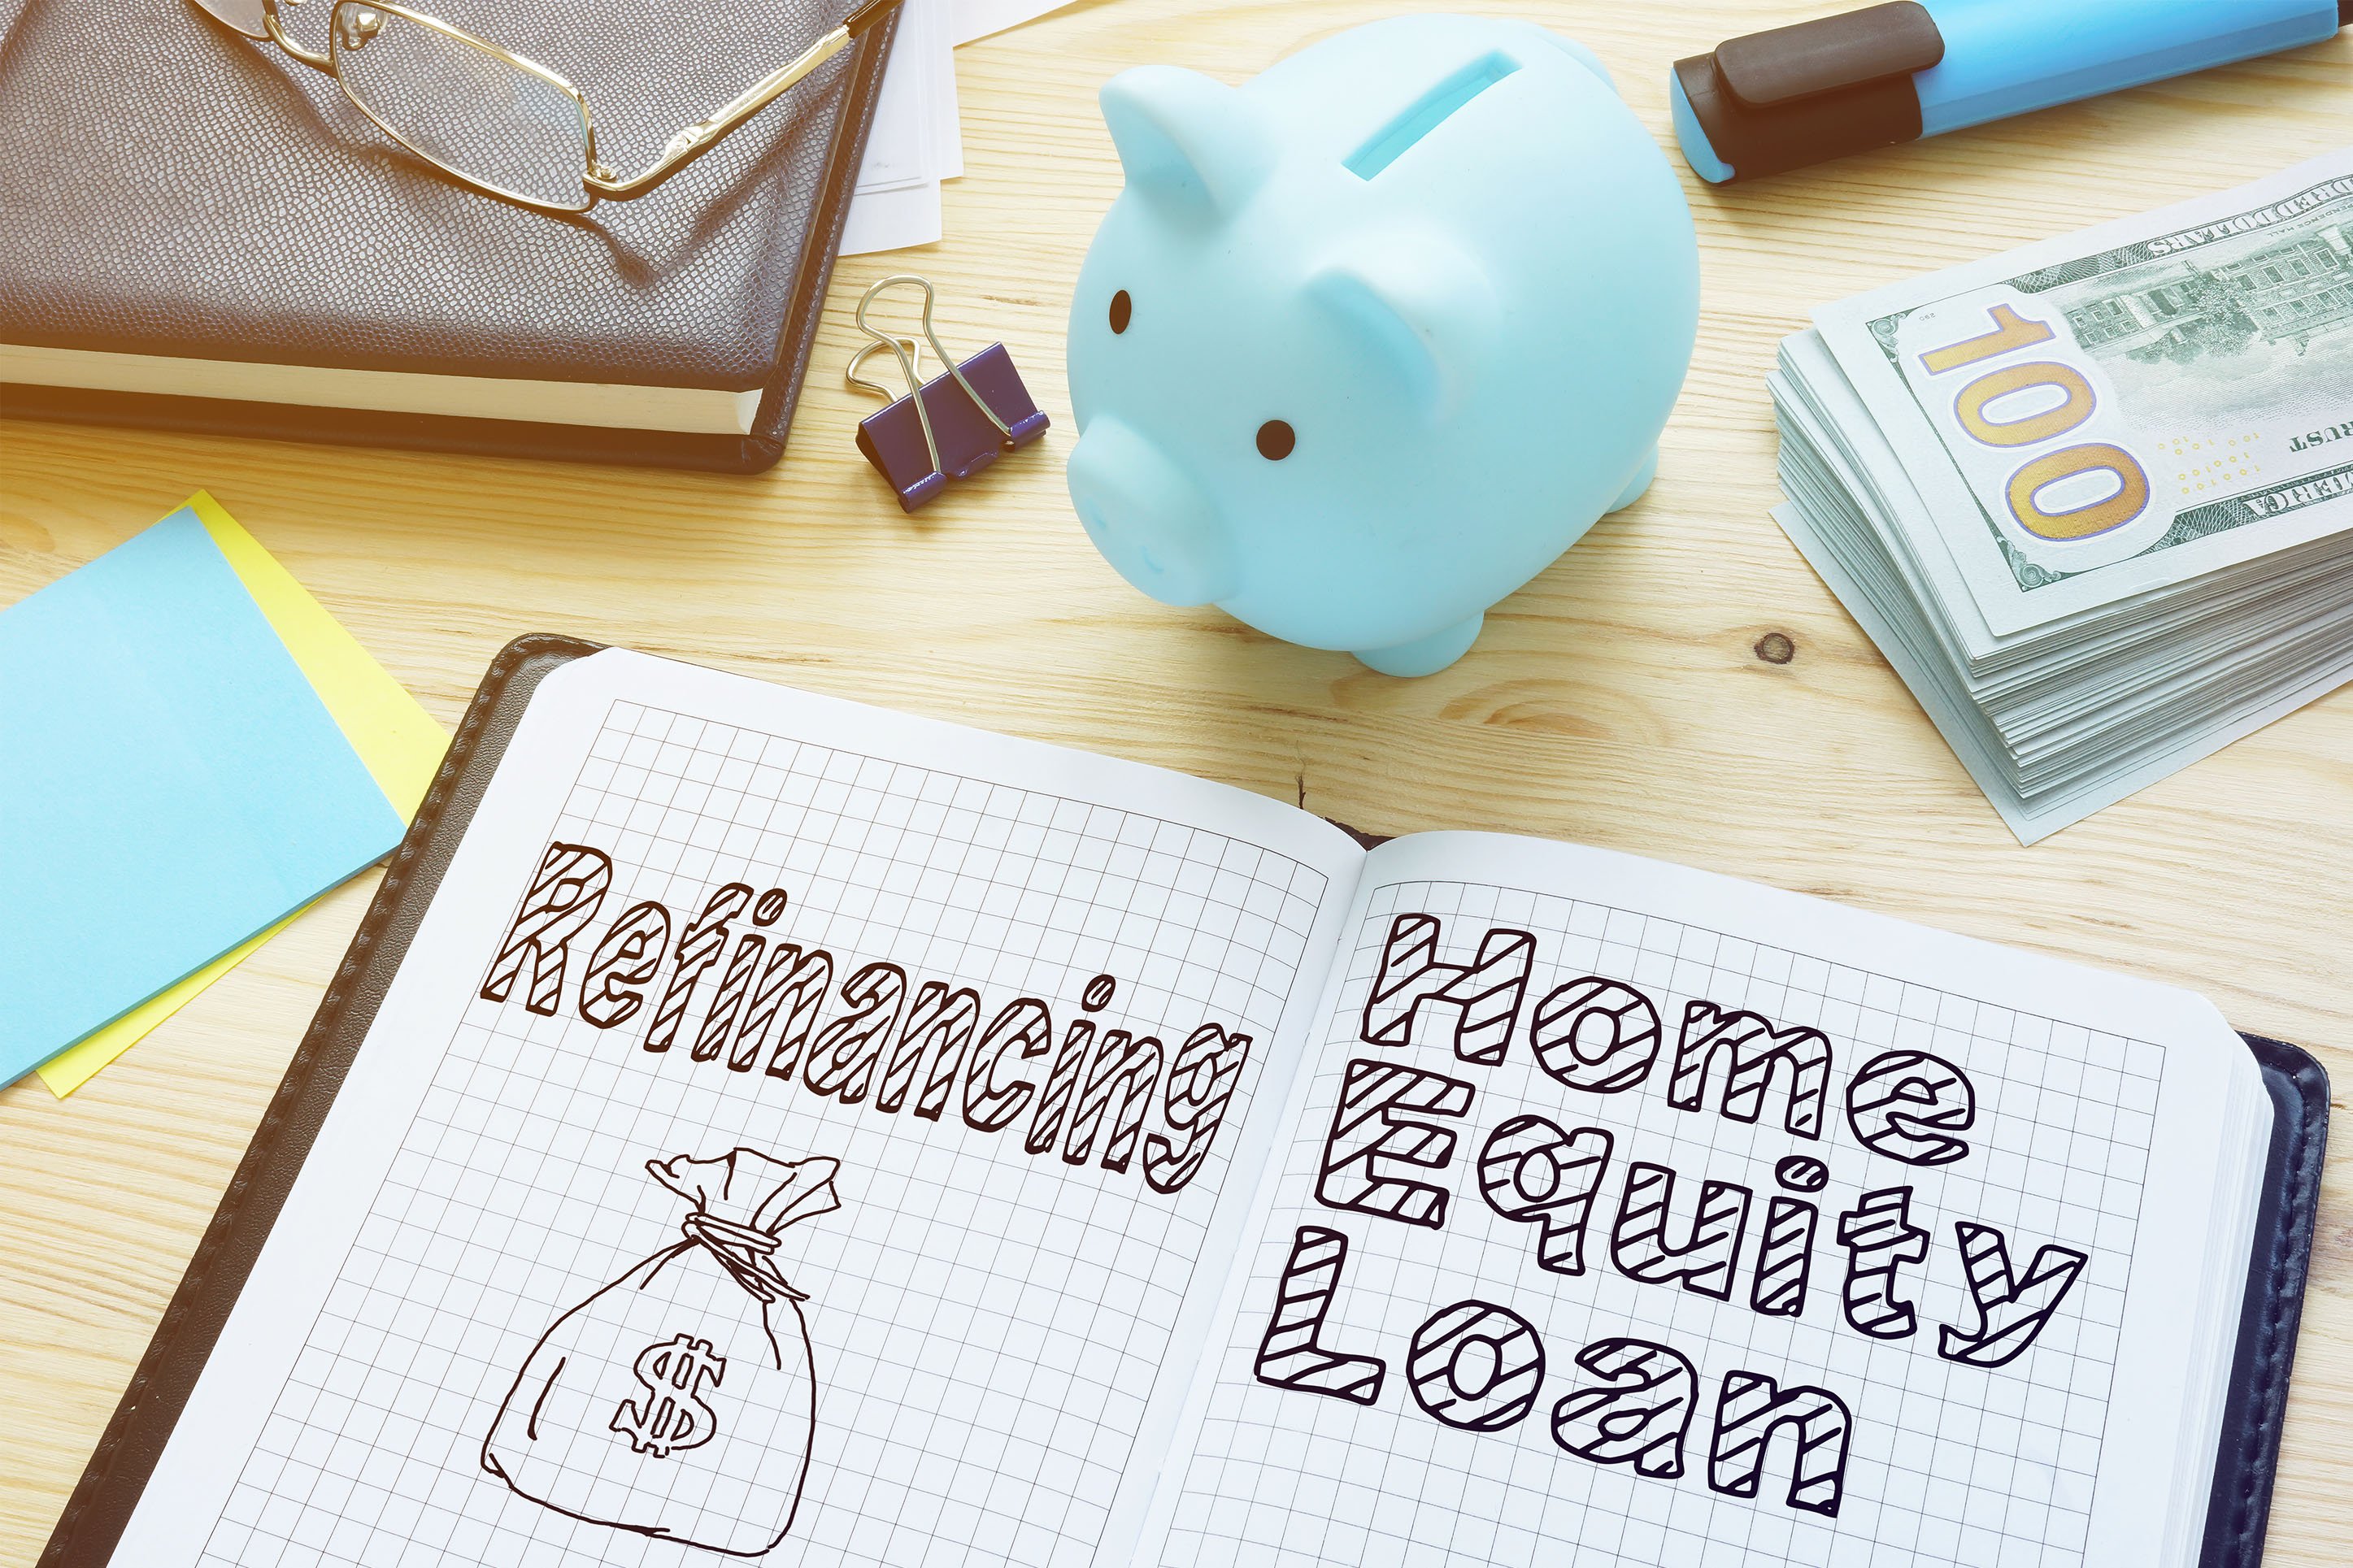 RMCU_home-equity-loan-blog3